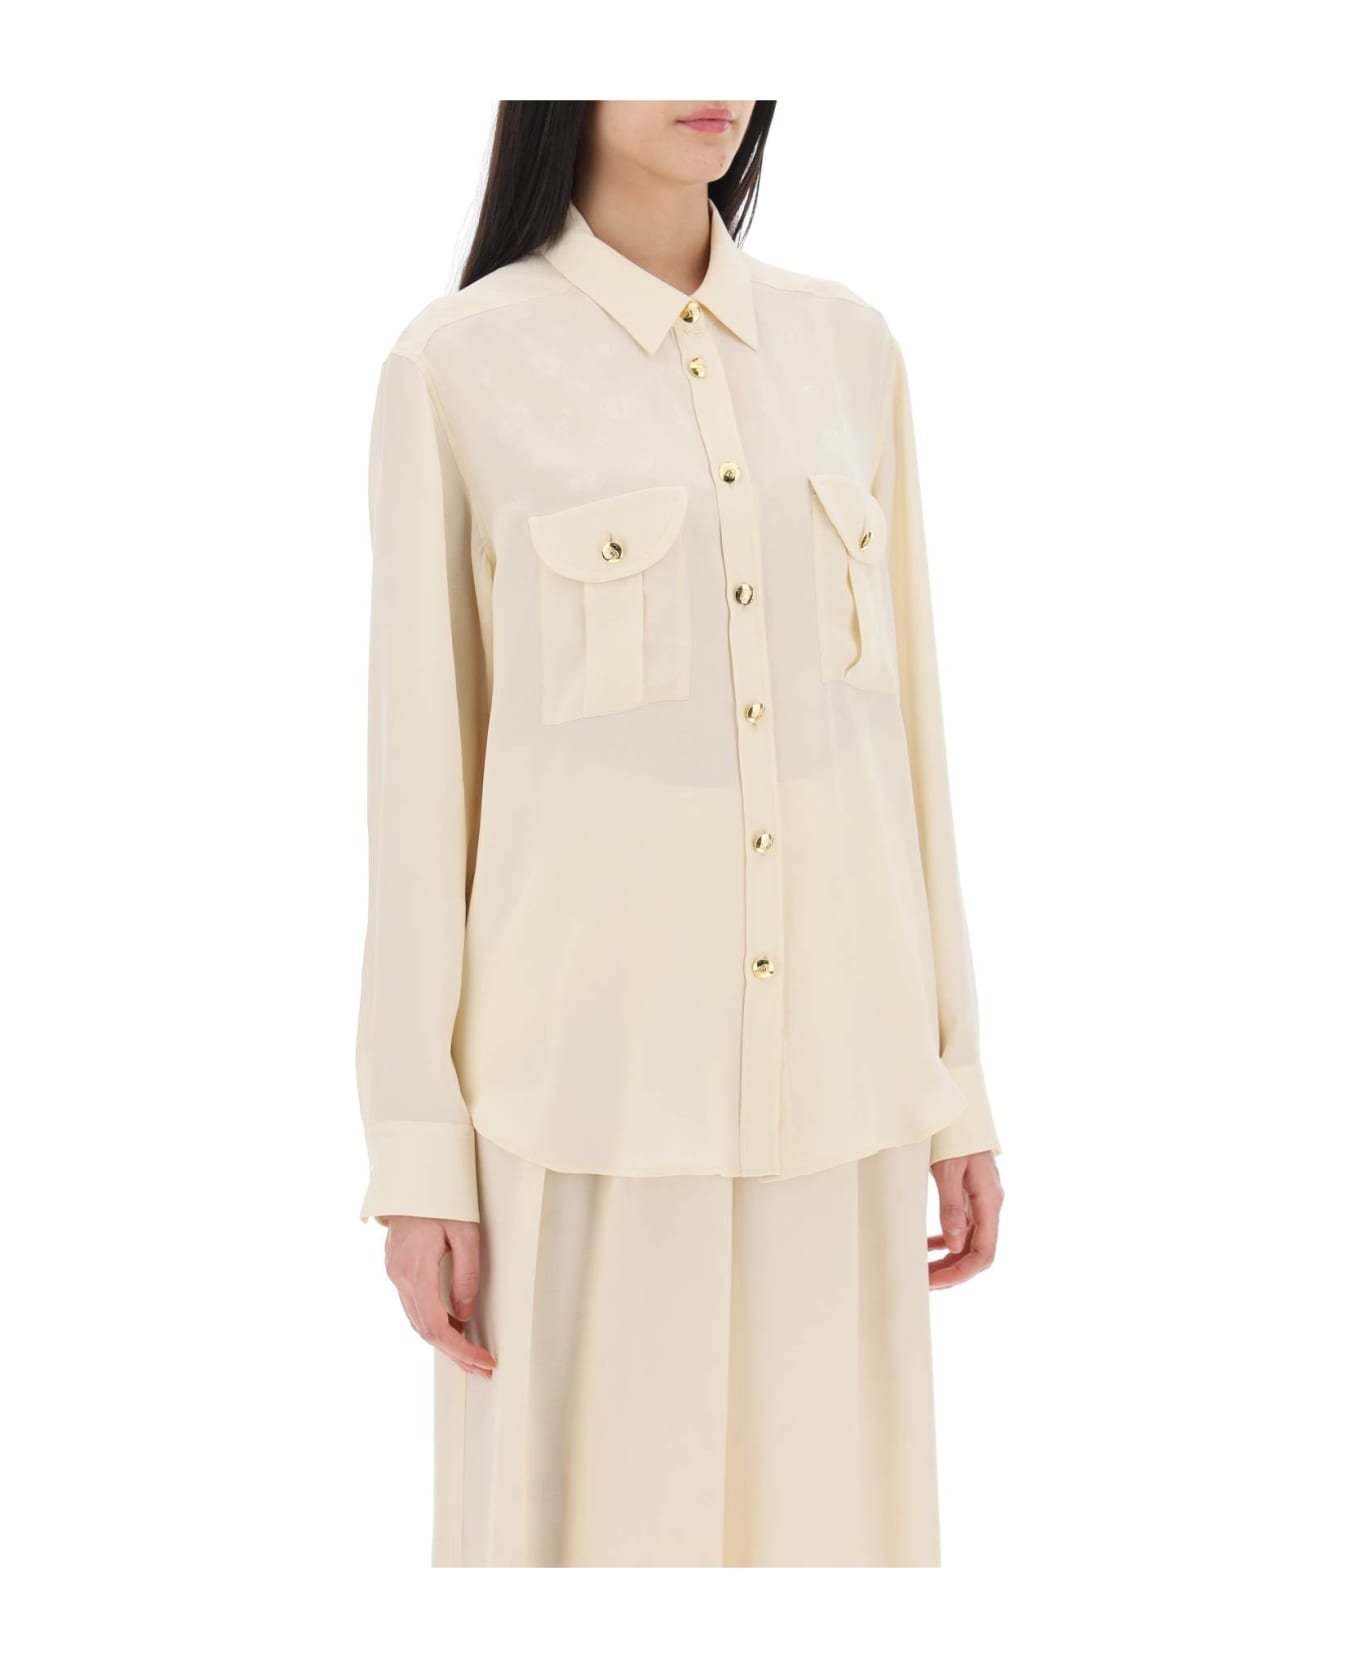 Blazé Milano Faverolles Jacquard Crepe Shirt - BUTTER (White) シャツ